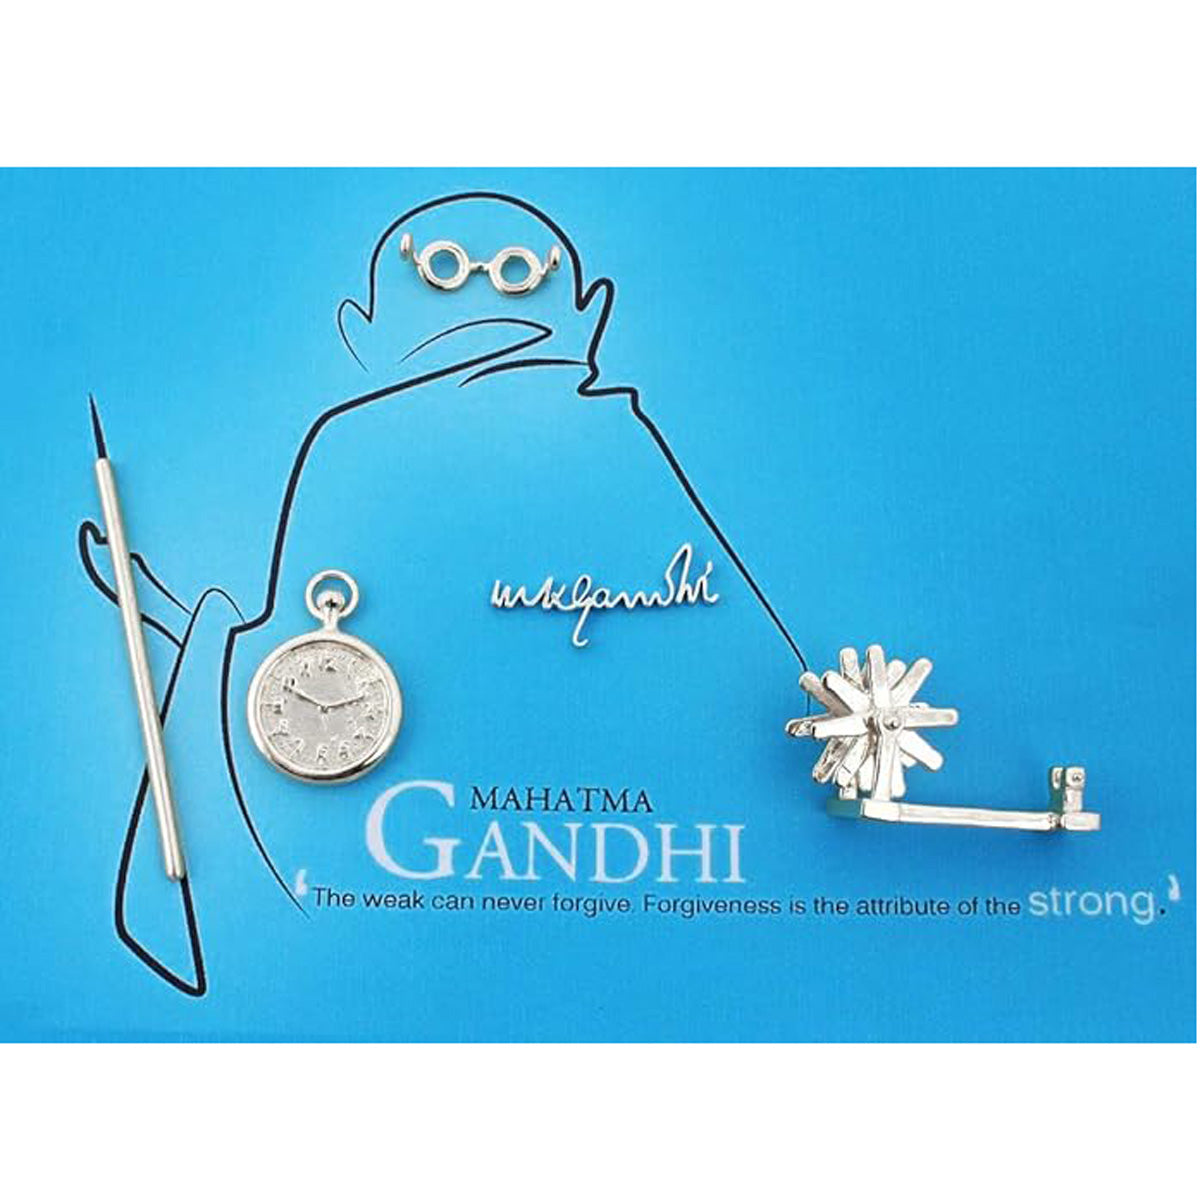 925 Sterling Silver Smriti Of National Father Of India Gandhi Ji Chakra, chashma, laathi, watch and signature